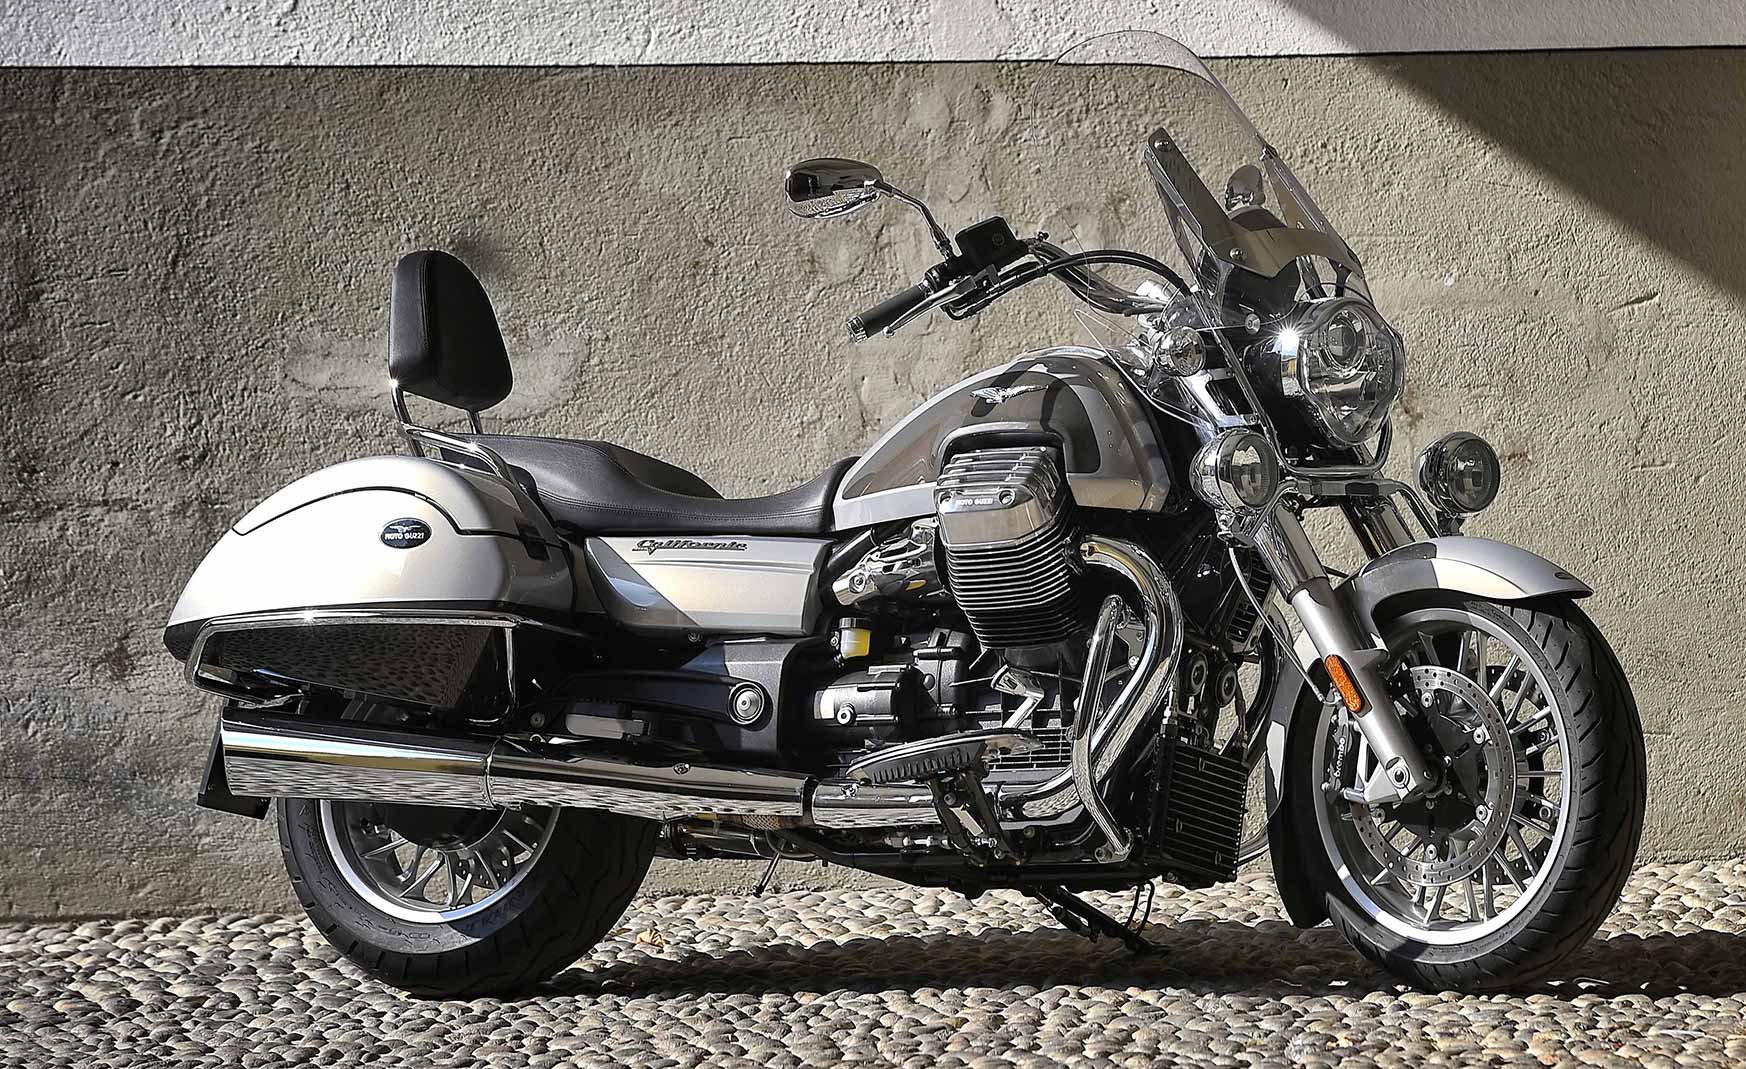 Moto Guzzi California 1400 Touring Motorcycle